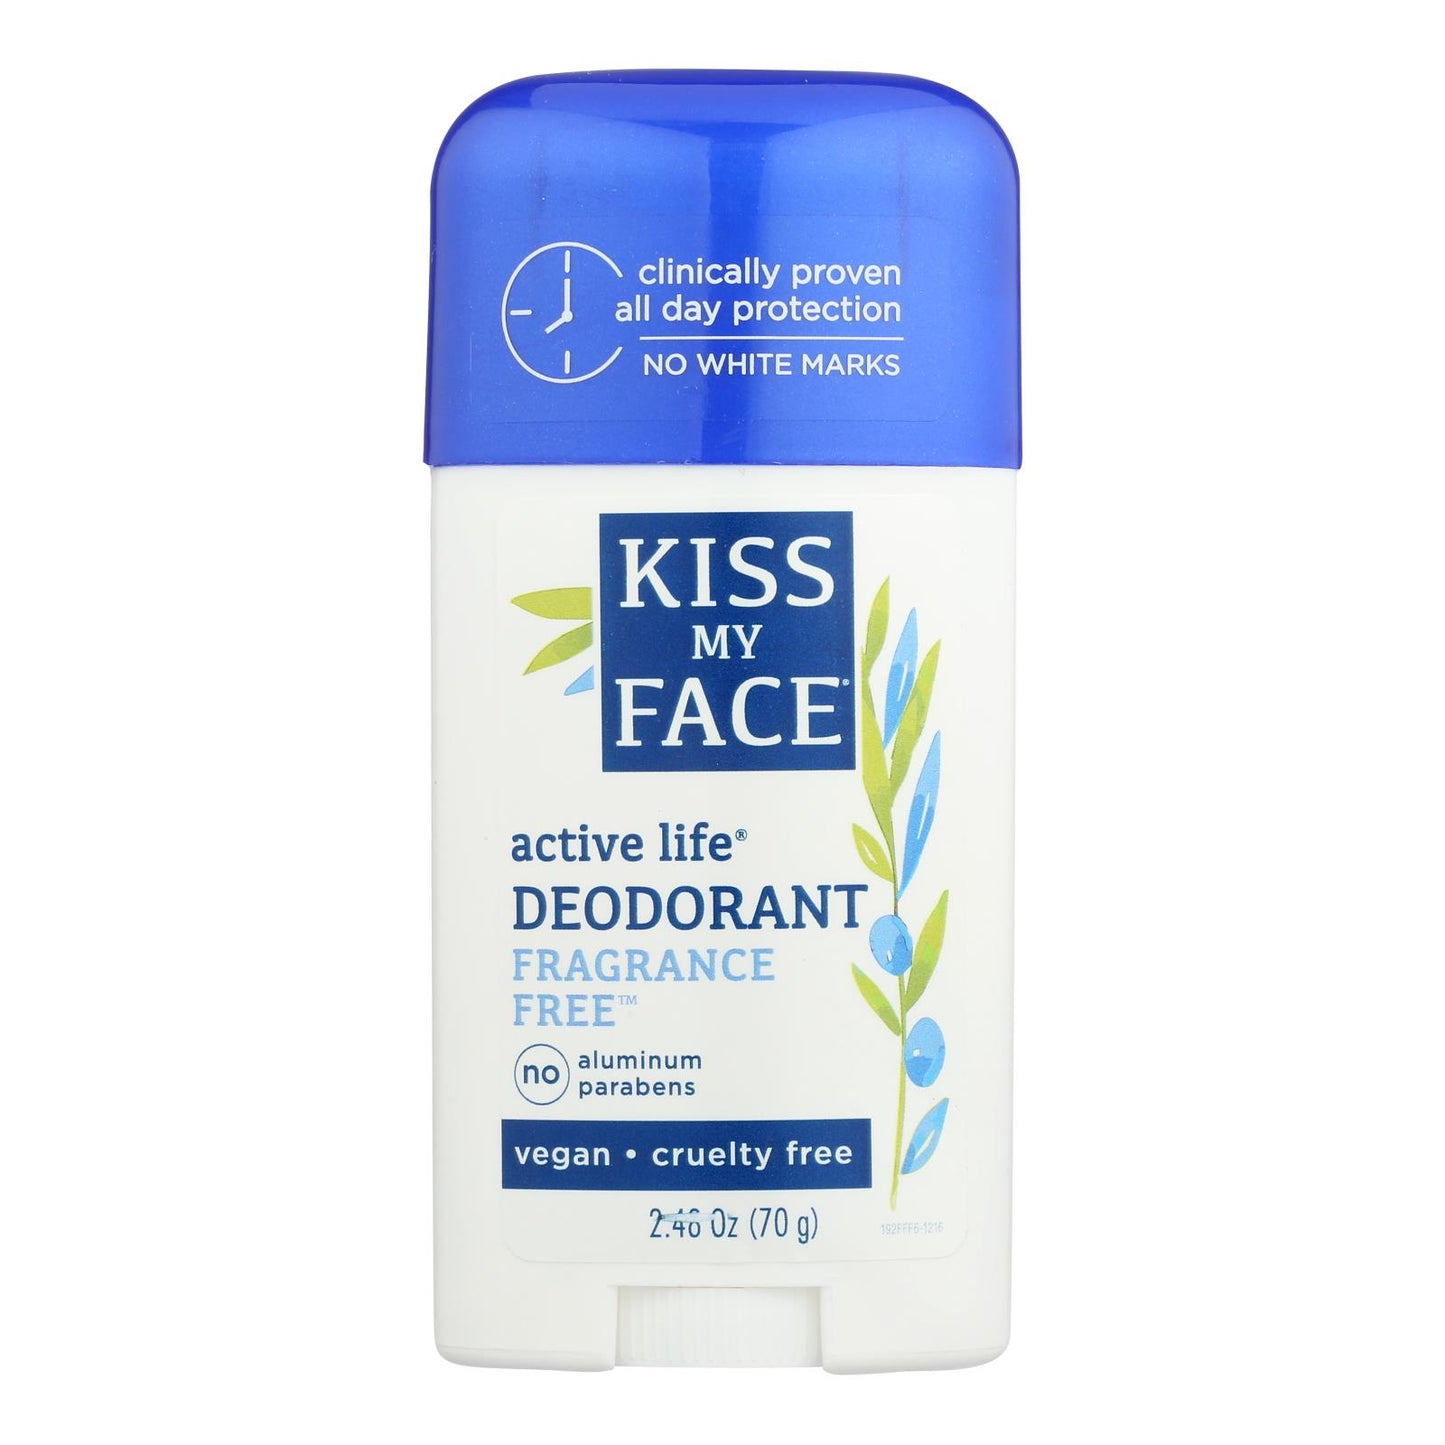 Kiss My Face Deodorant Natural Active Life Fragrance Free Natural Active Life Aluminum Free - 2.48 Oz